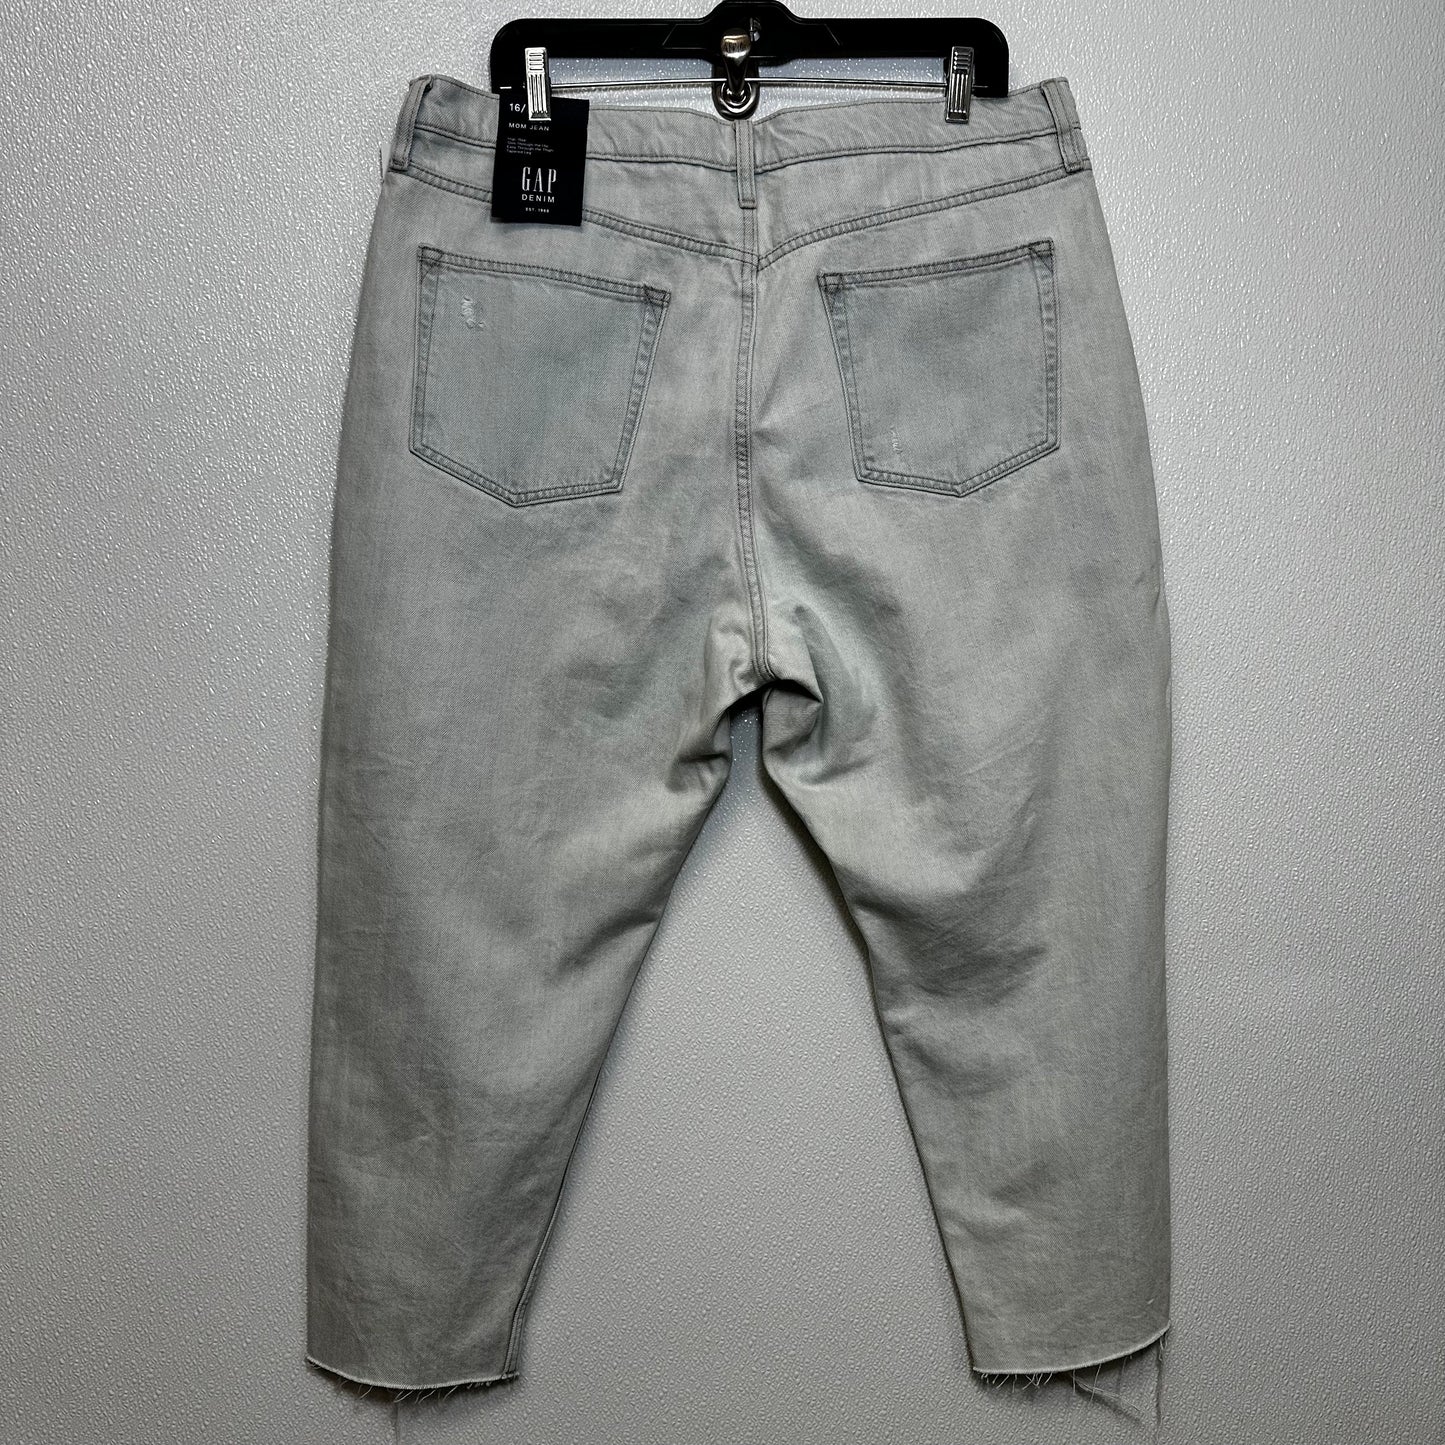 Denim Jeans Relaxed/boyfriend Gap, Size 16